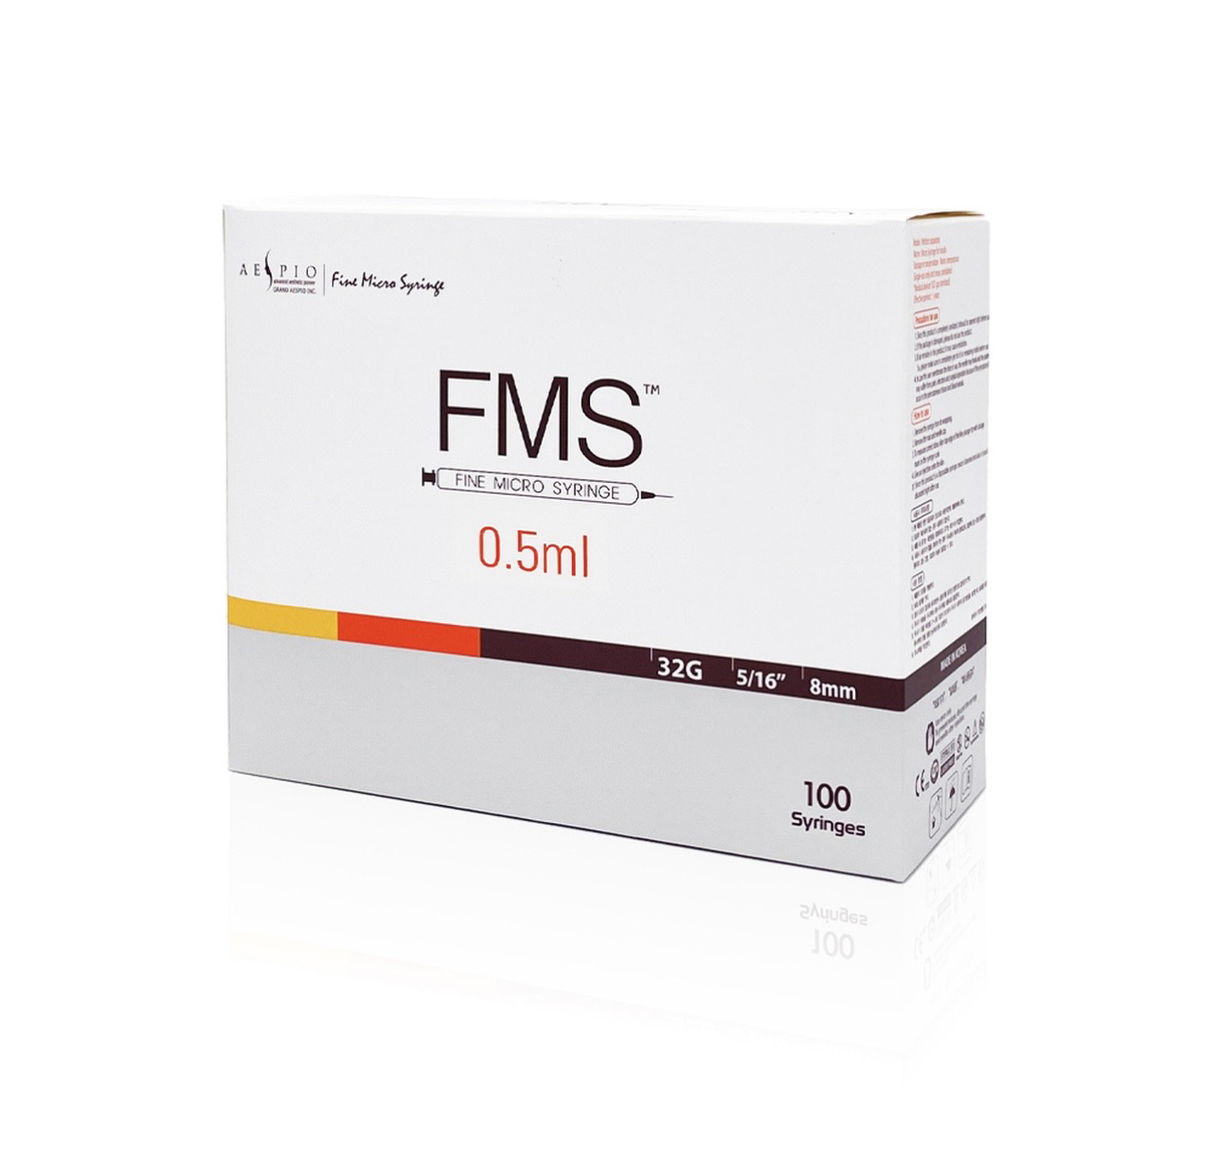 FMS Micro Syringe 32G 0.5ml (Box of 100)